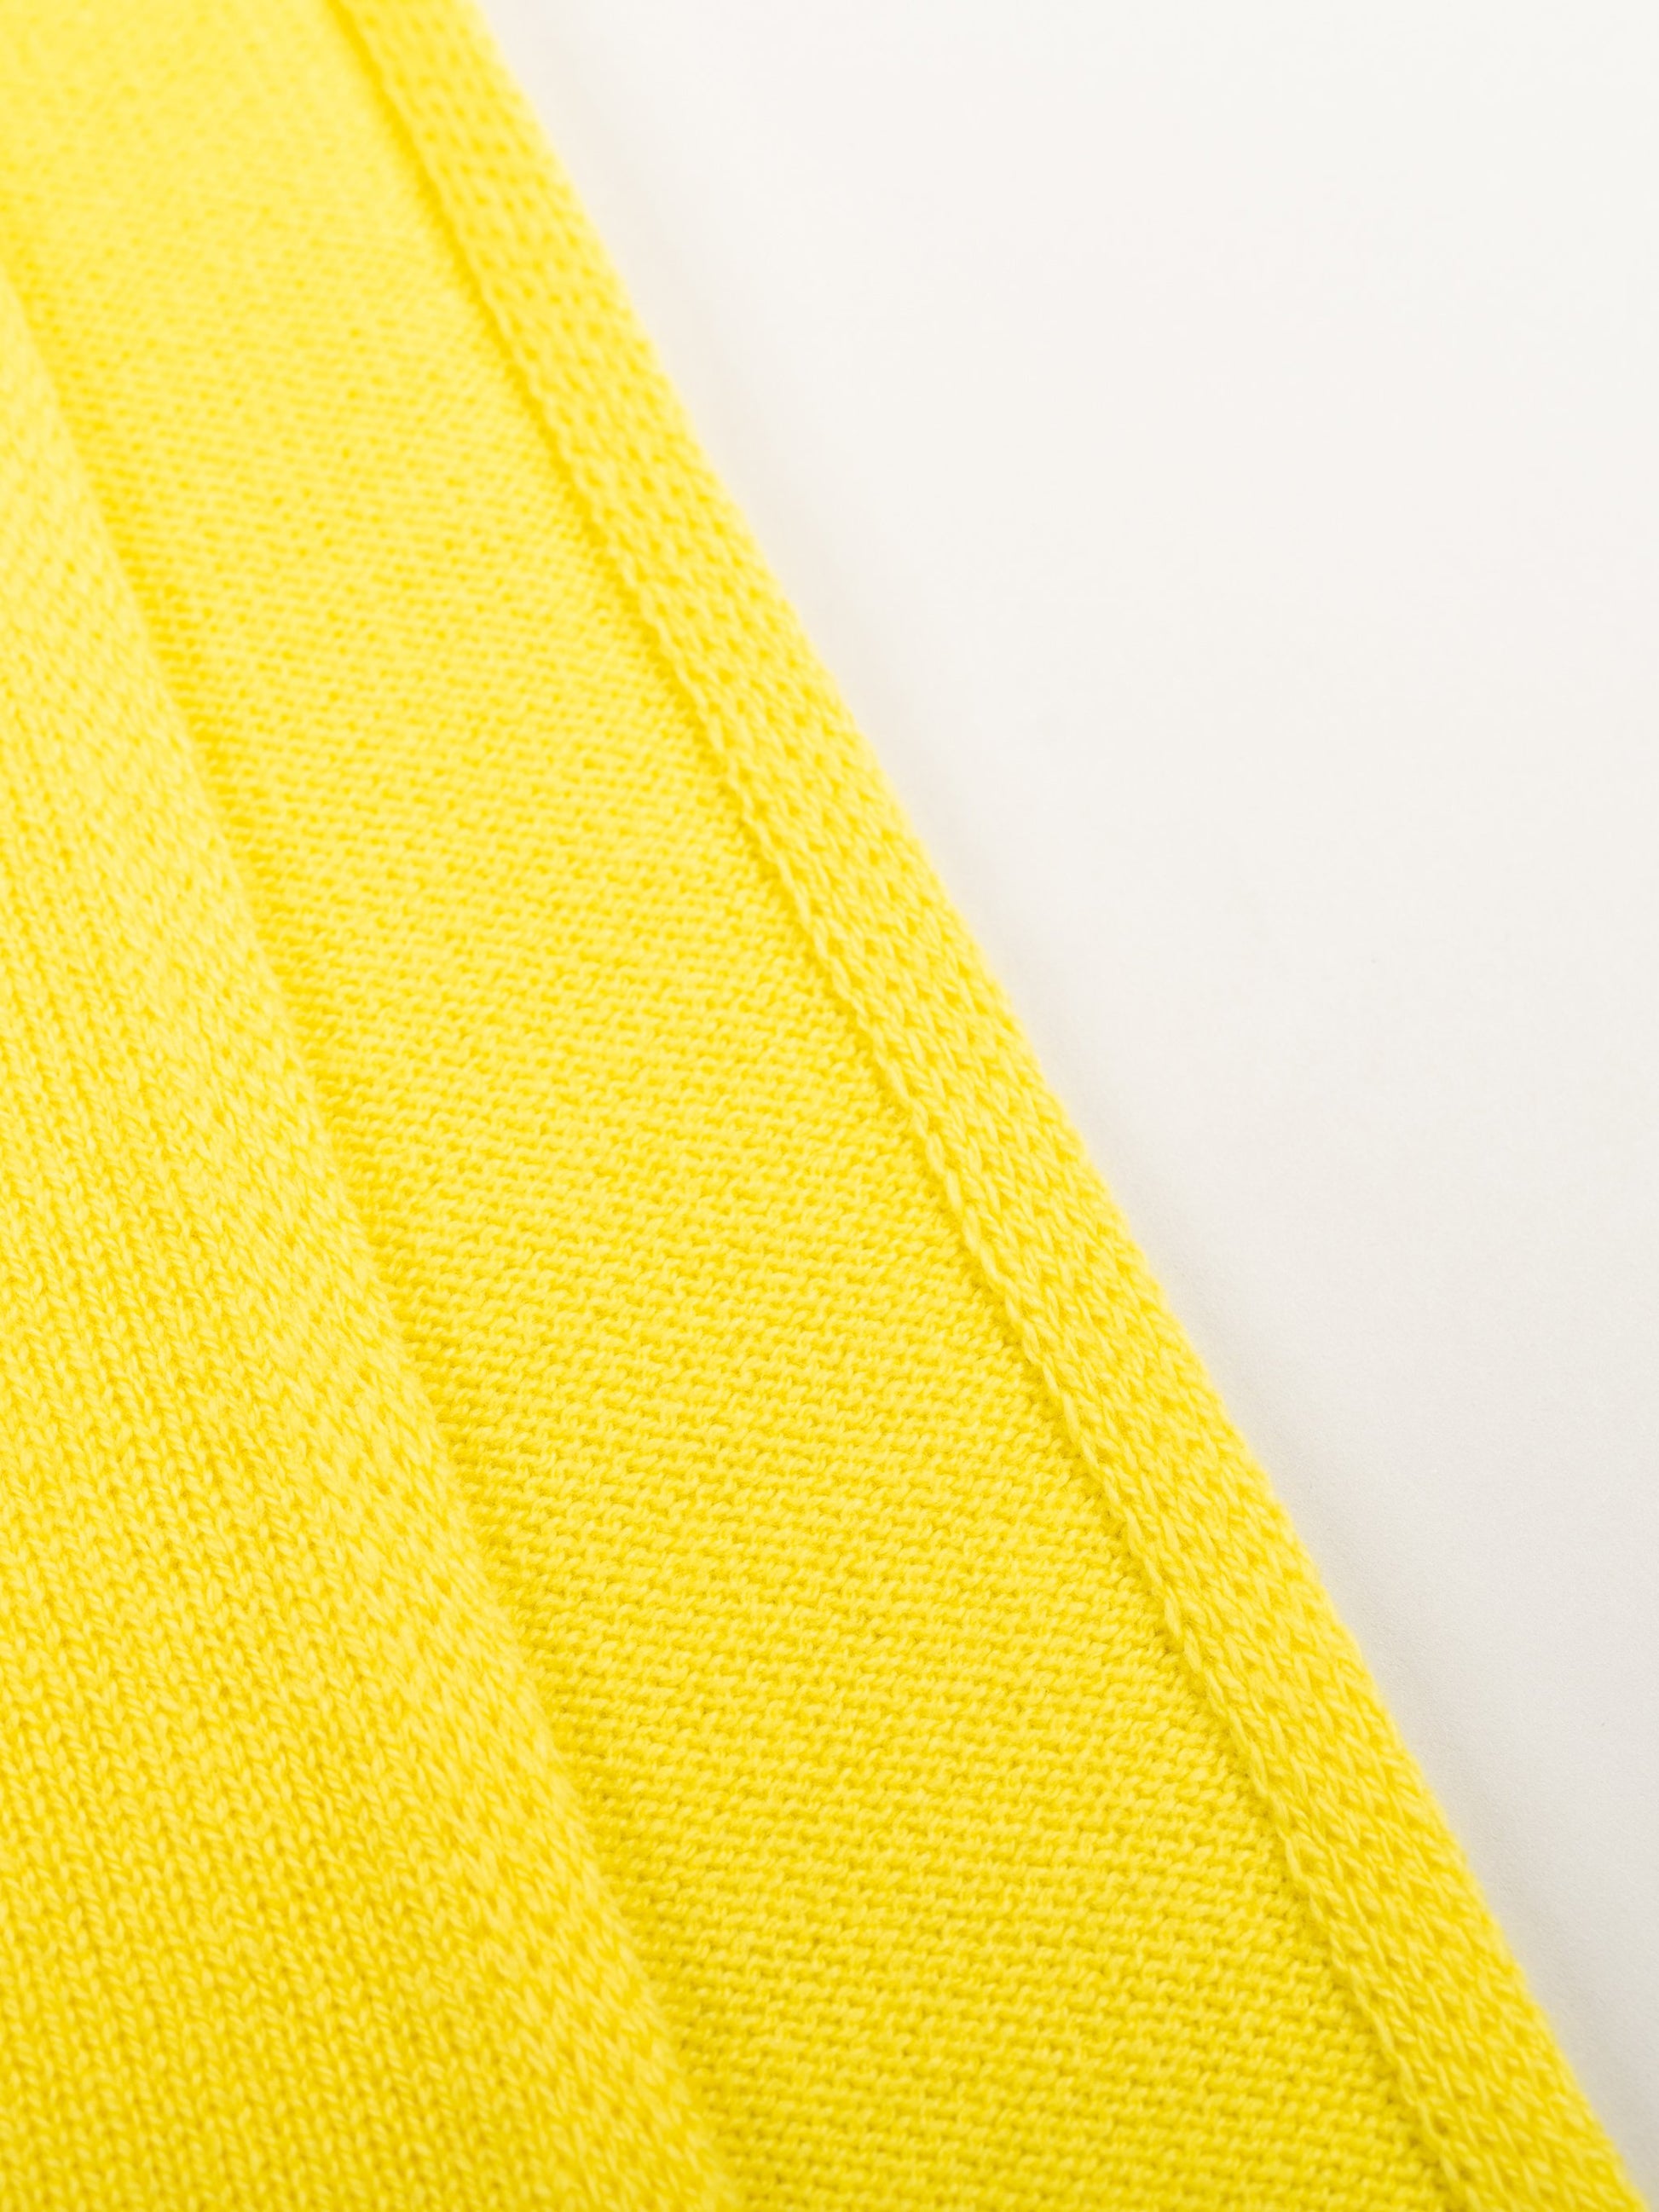 yellow merino wool wrap edging - woolkind